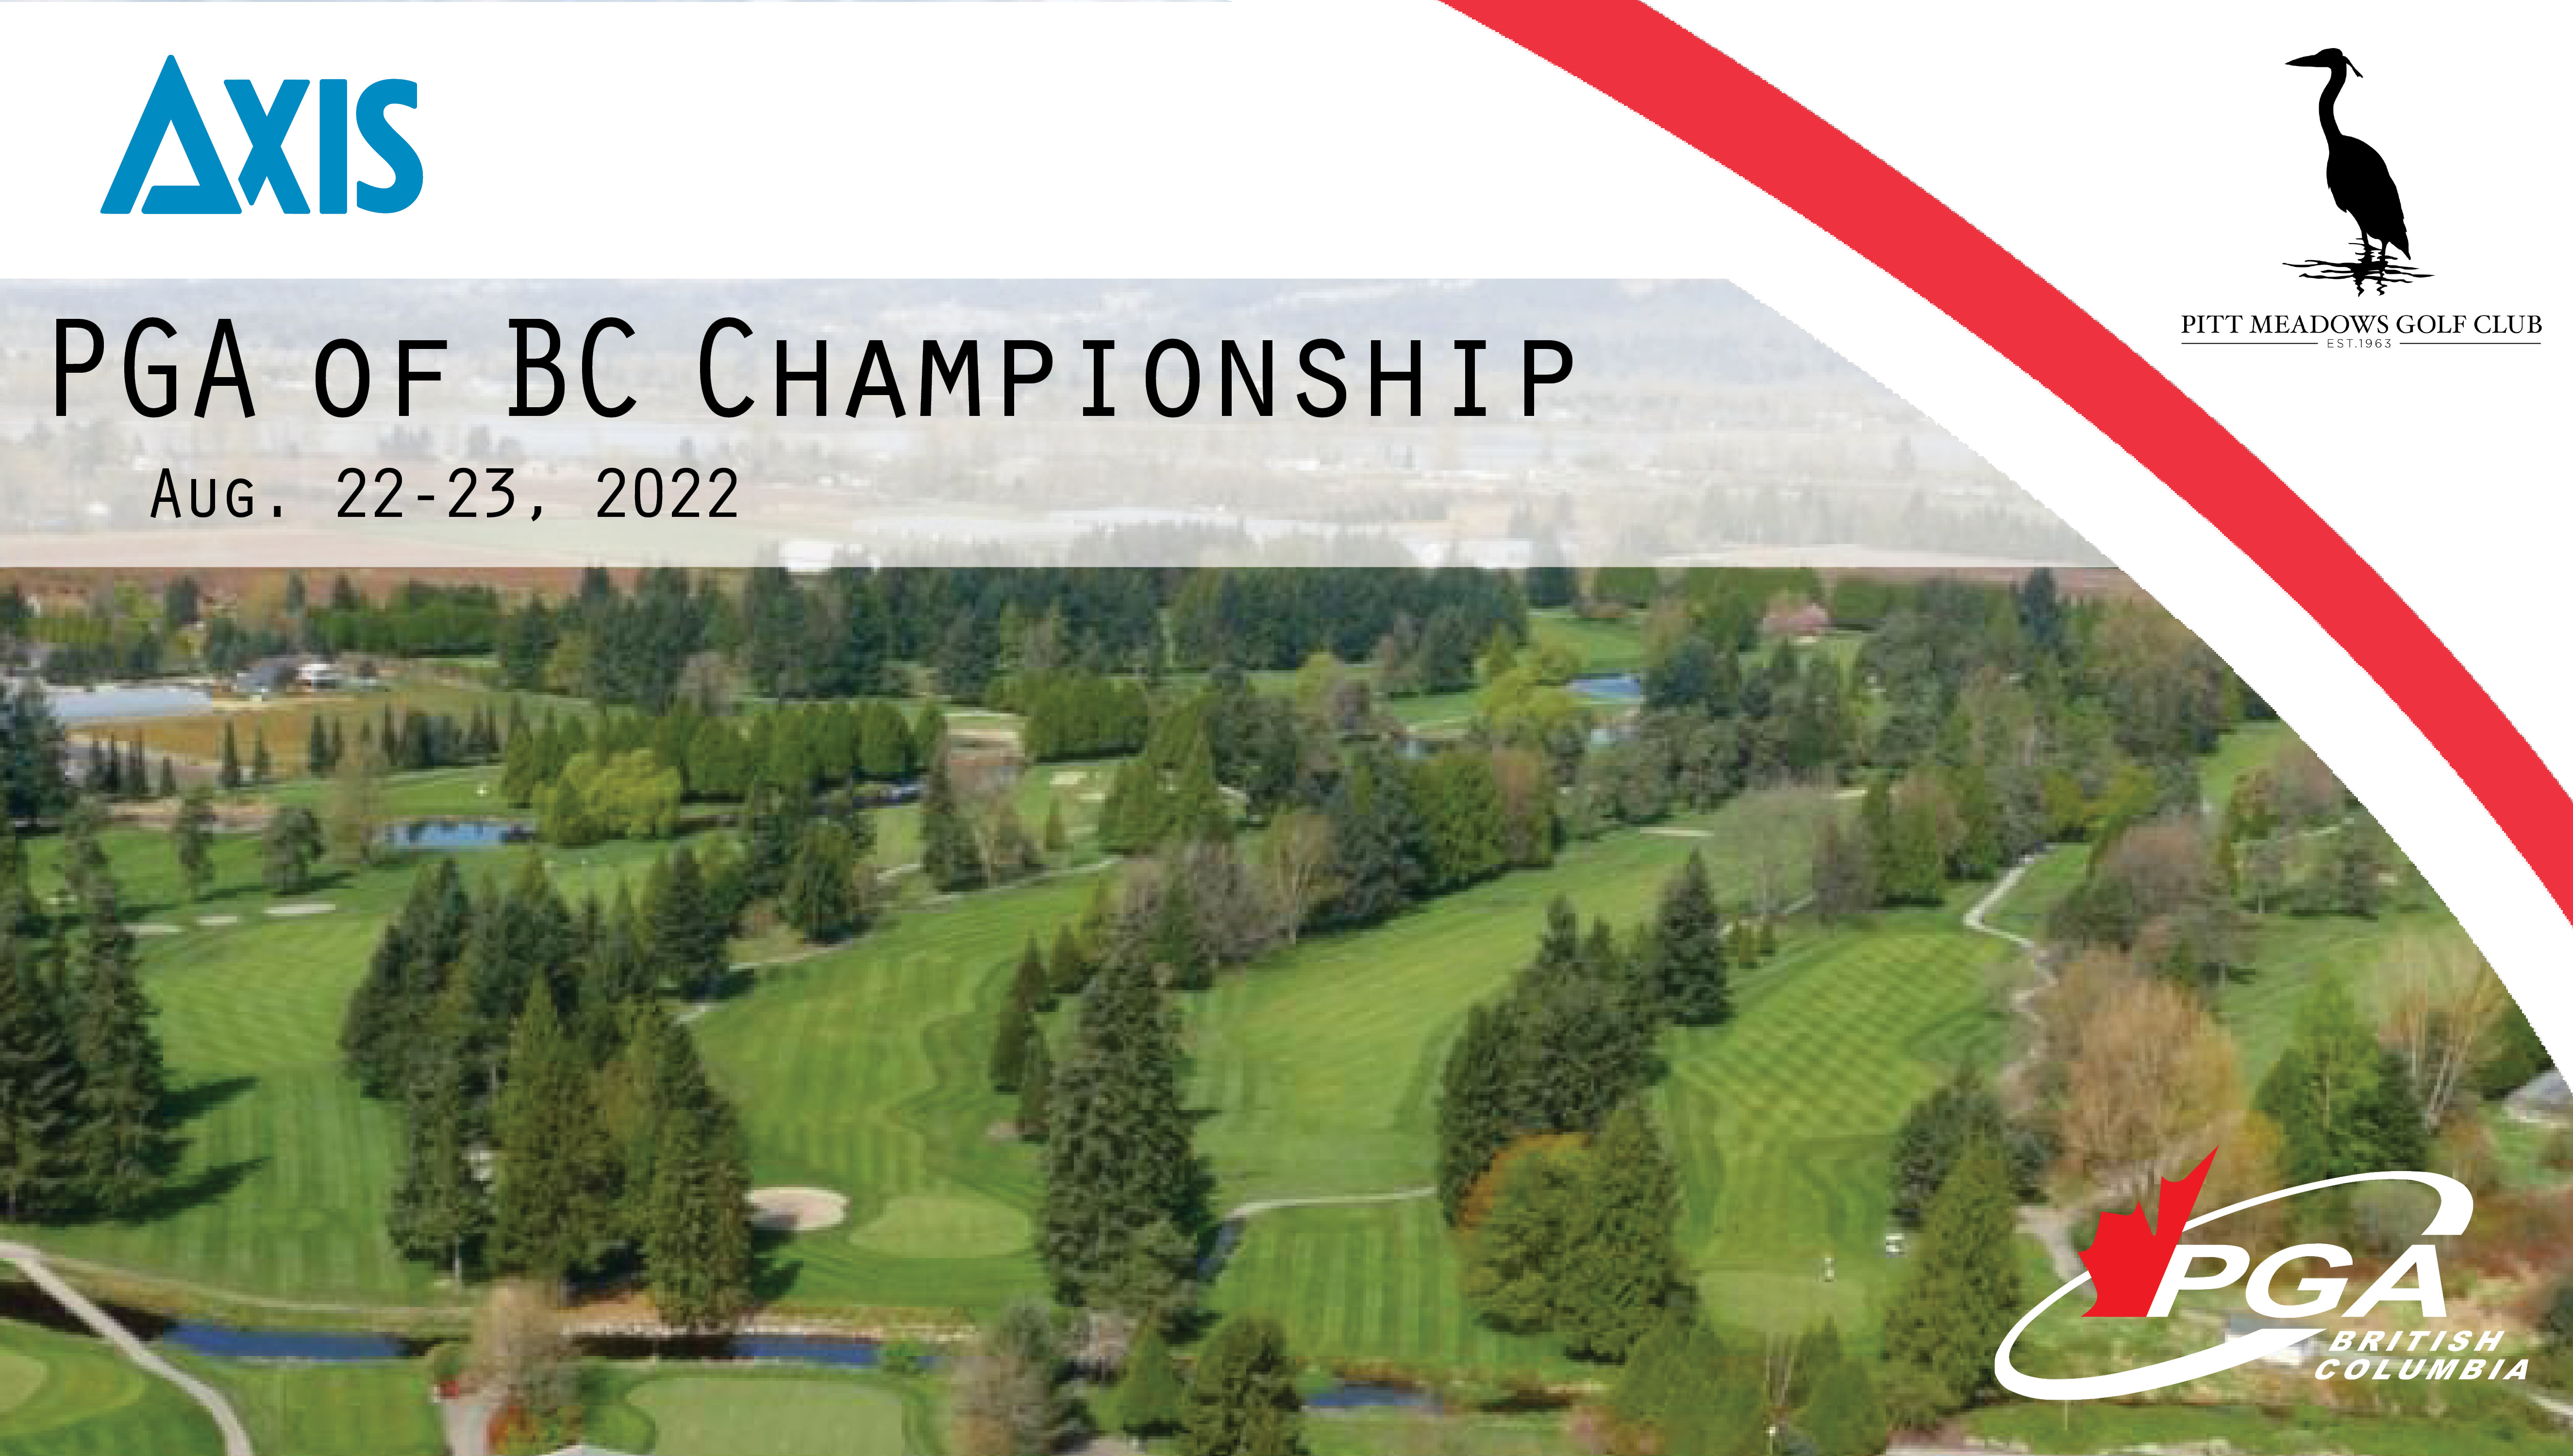 Pitt Meadows Golf Club set to host PGA of BC Championship PGA of British Columbia